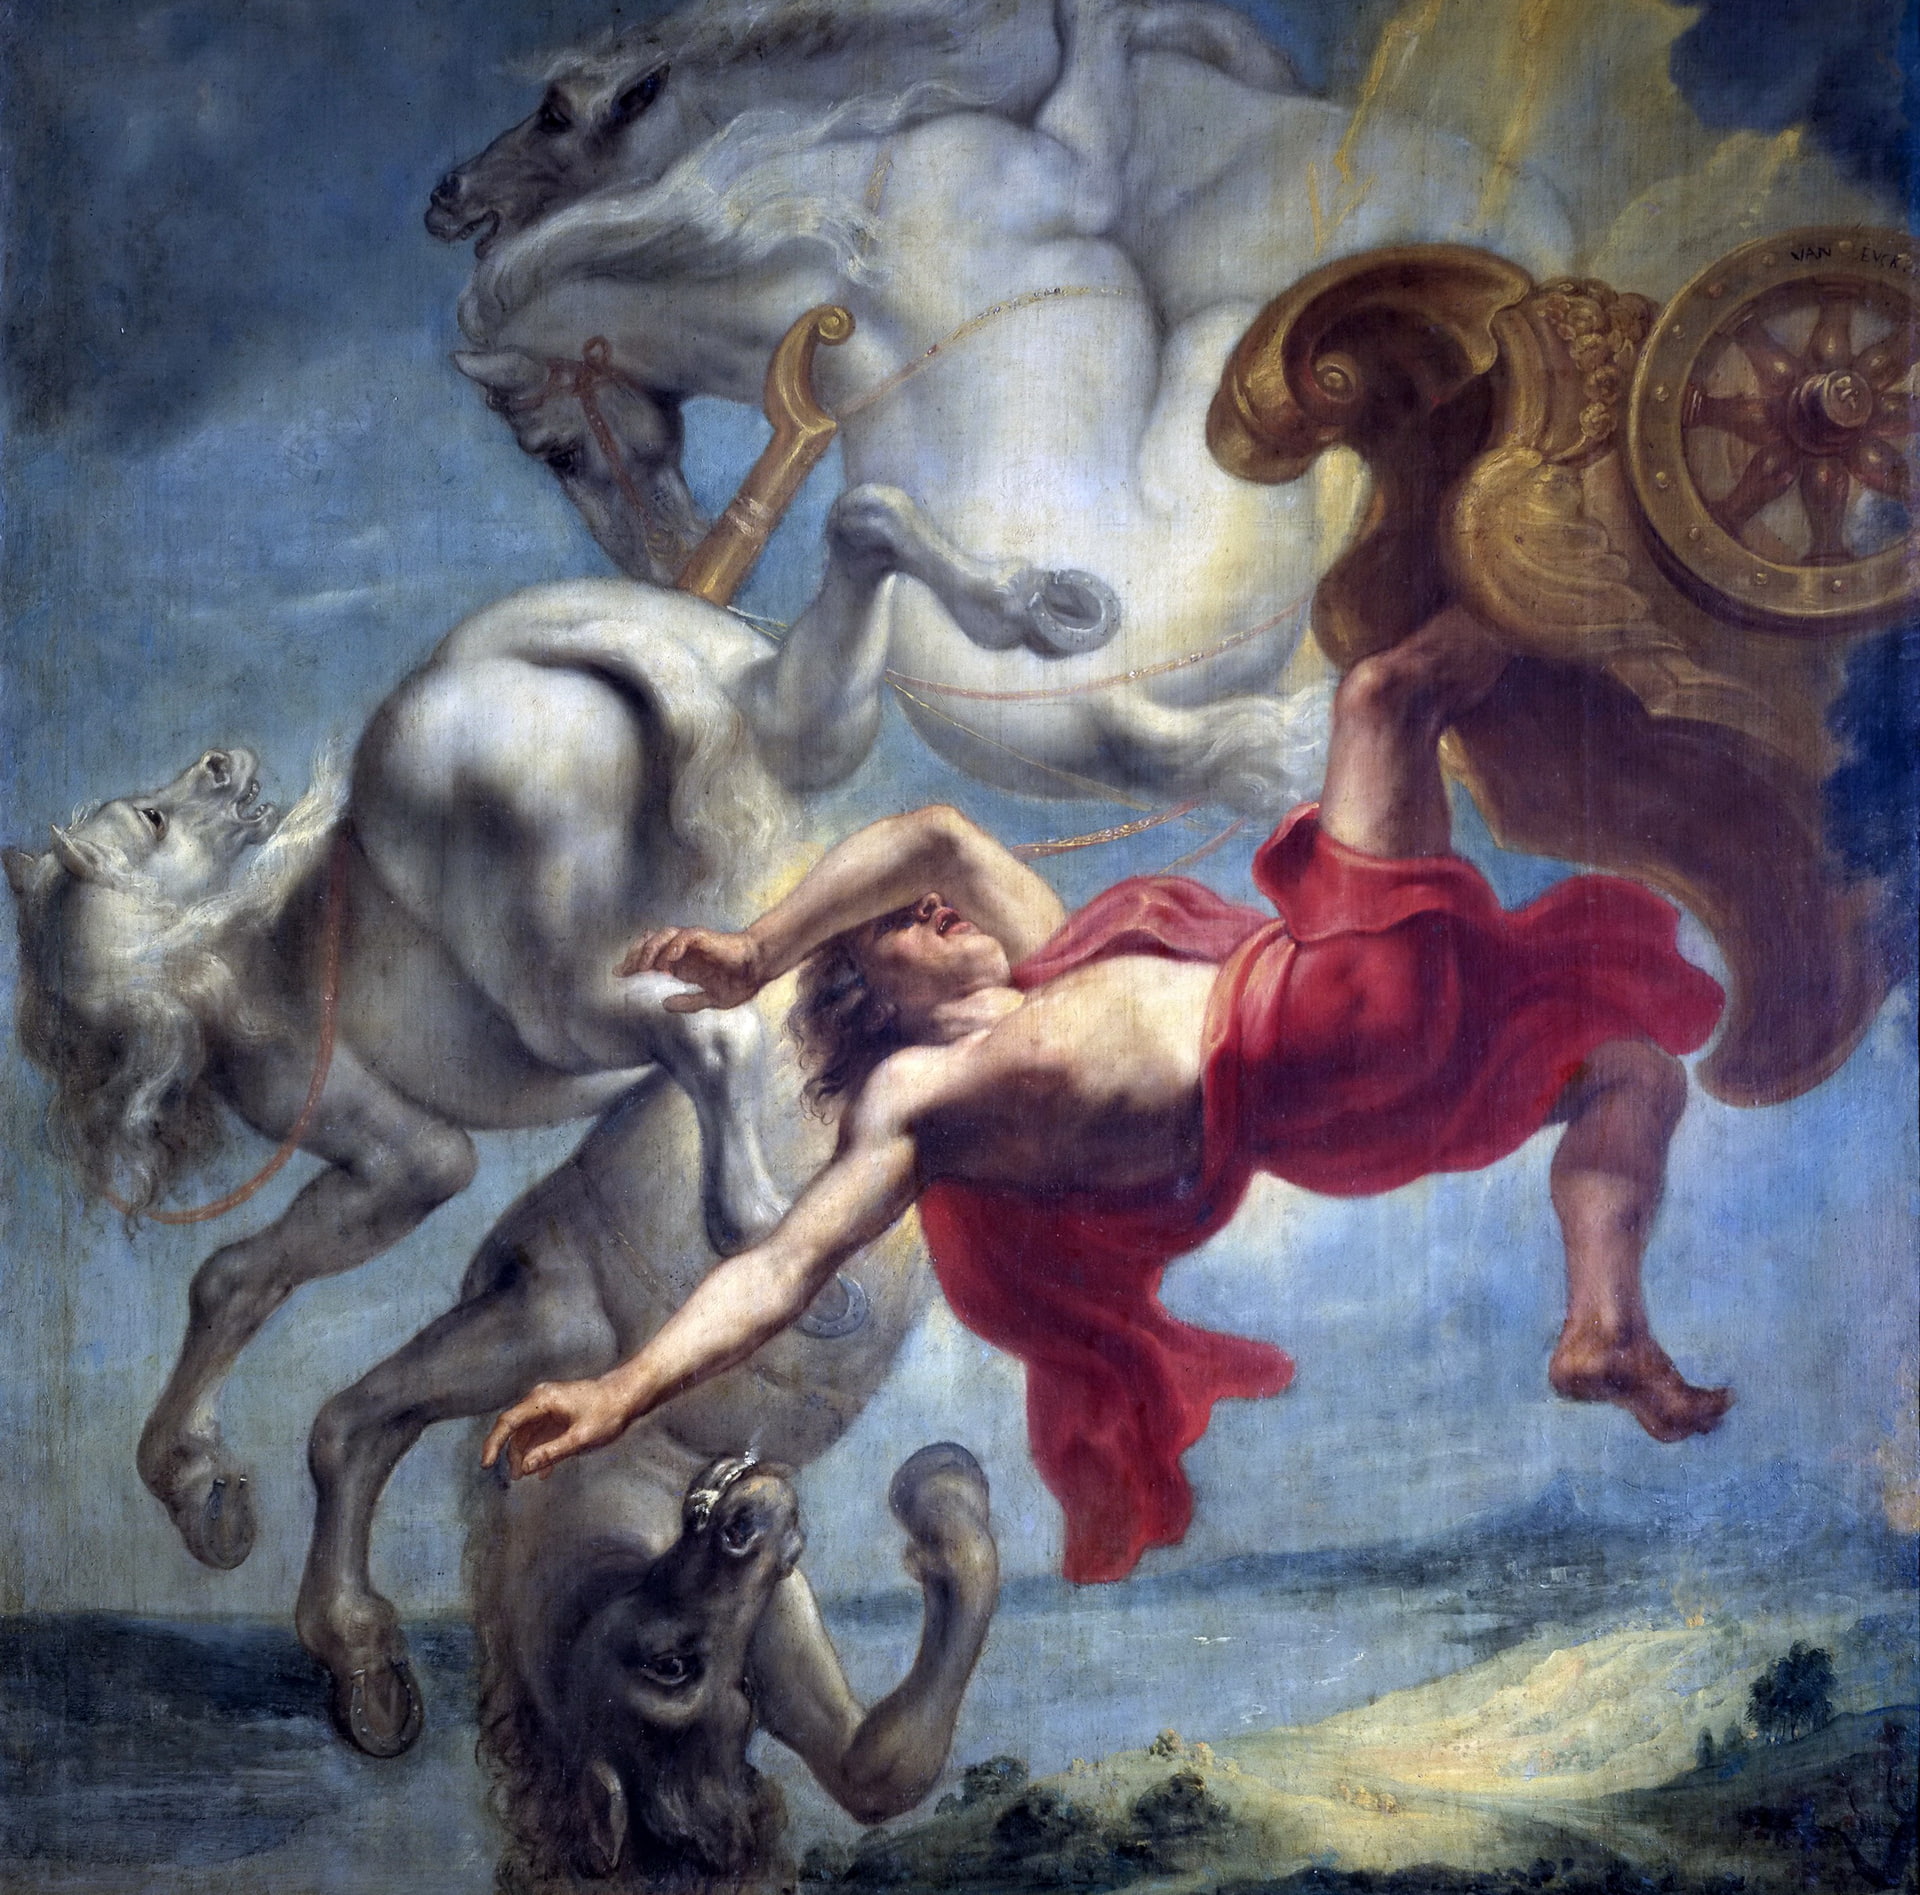 picture, mythology, Jan Karel van Eyck, The Fall Of Phaeton